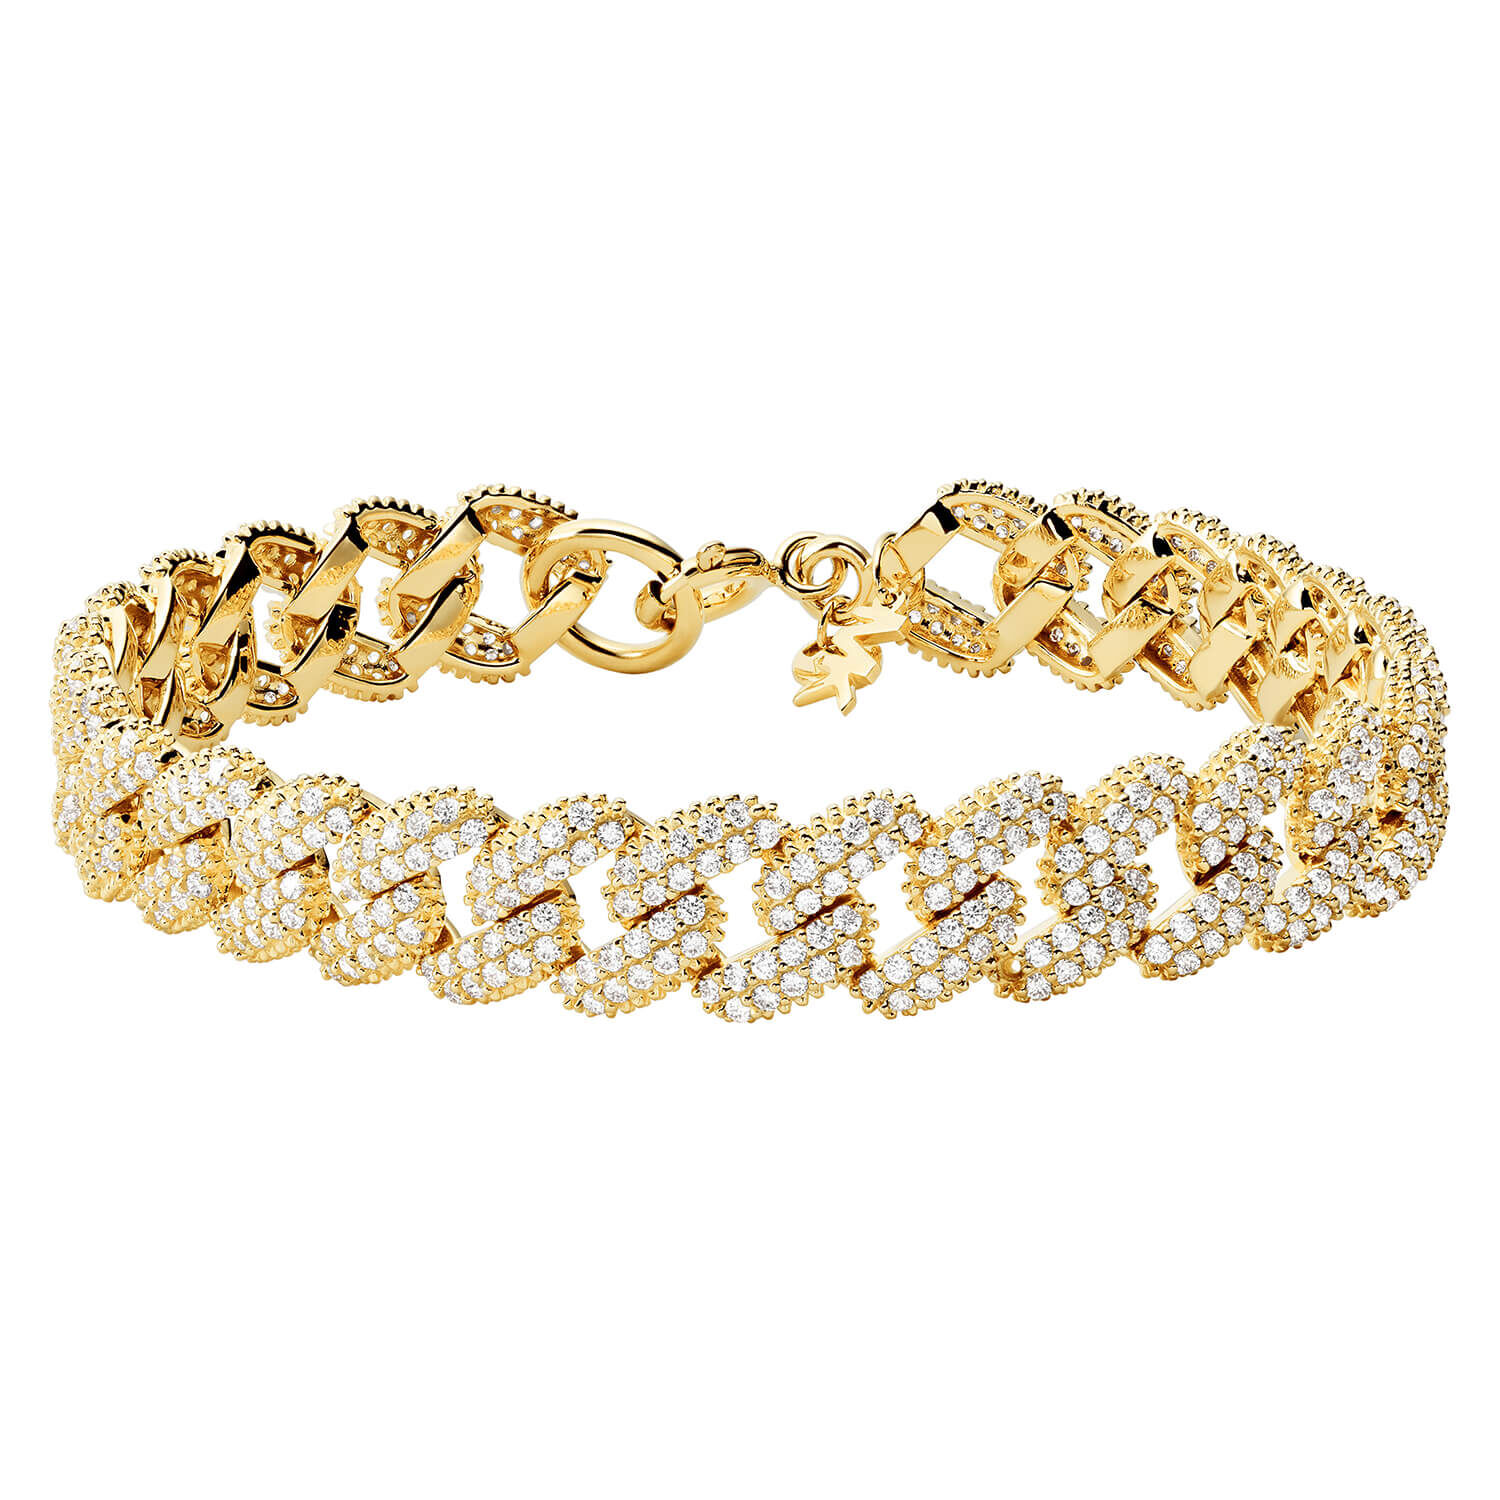 Michael Kors | Jewelry | Michael Kors Diamond Bracelet | Poshmark